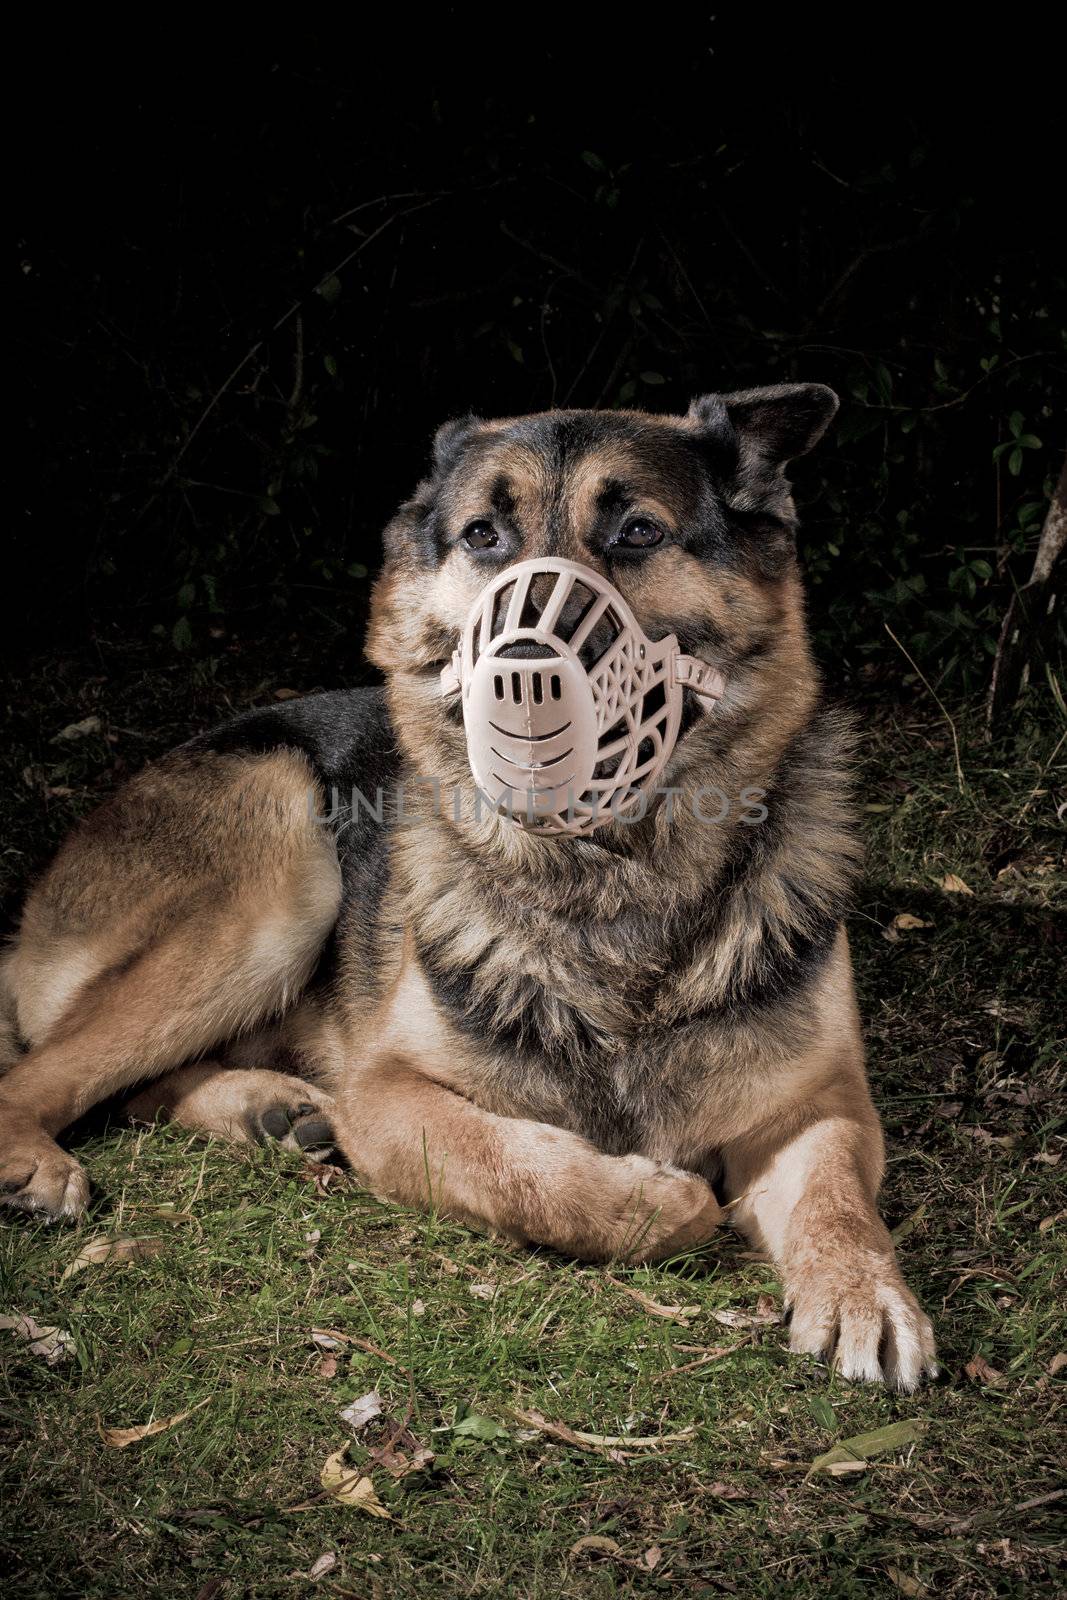 German Shepherd dog wearing a muzzle